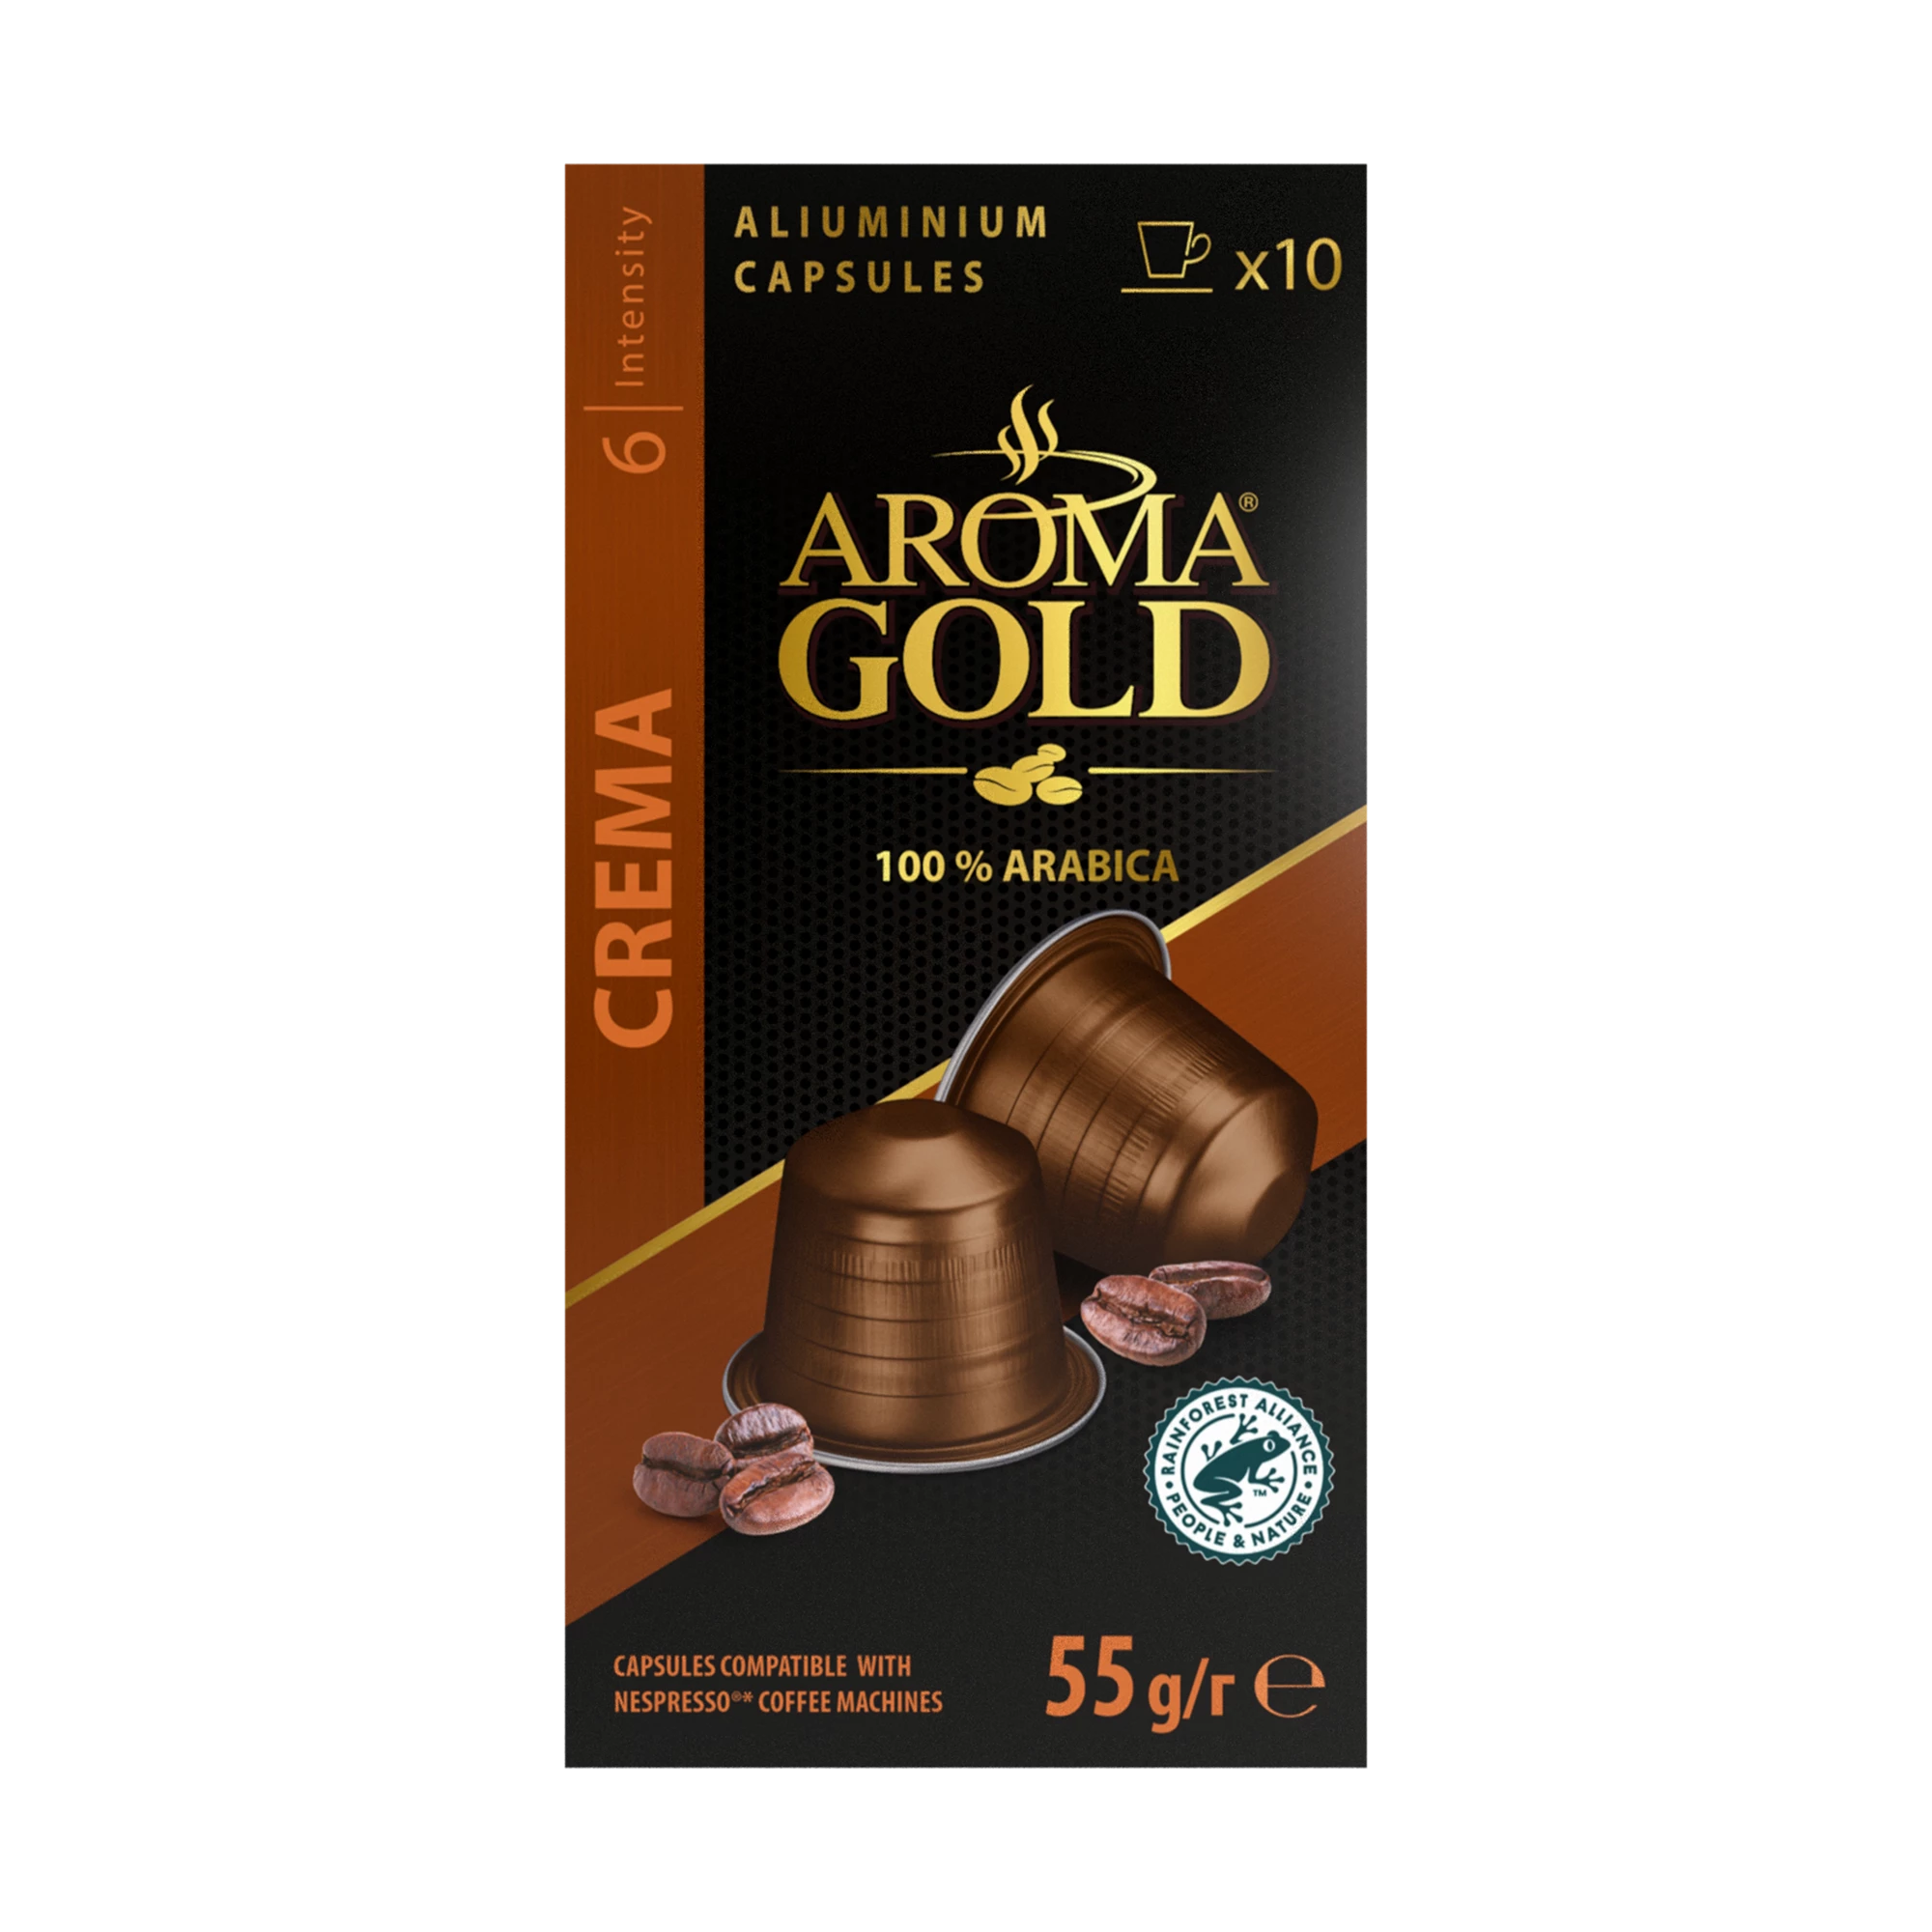 Café Crema kompatibel mit Nespresso X 10. (Intensität 6) – Aroma Gold